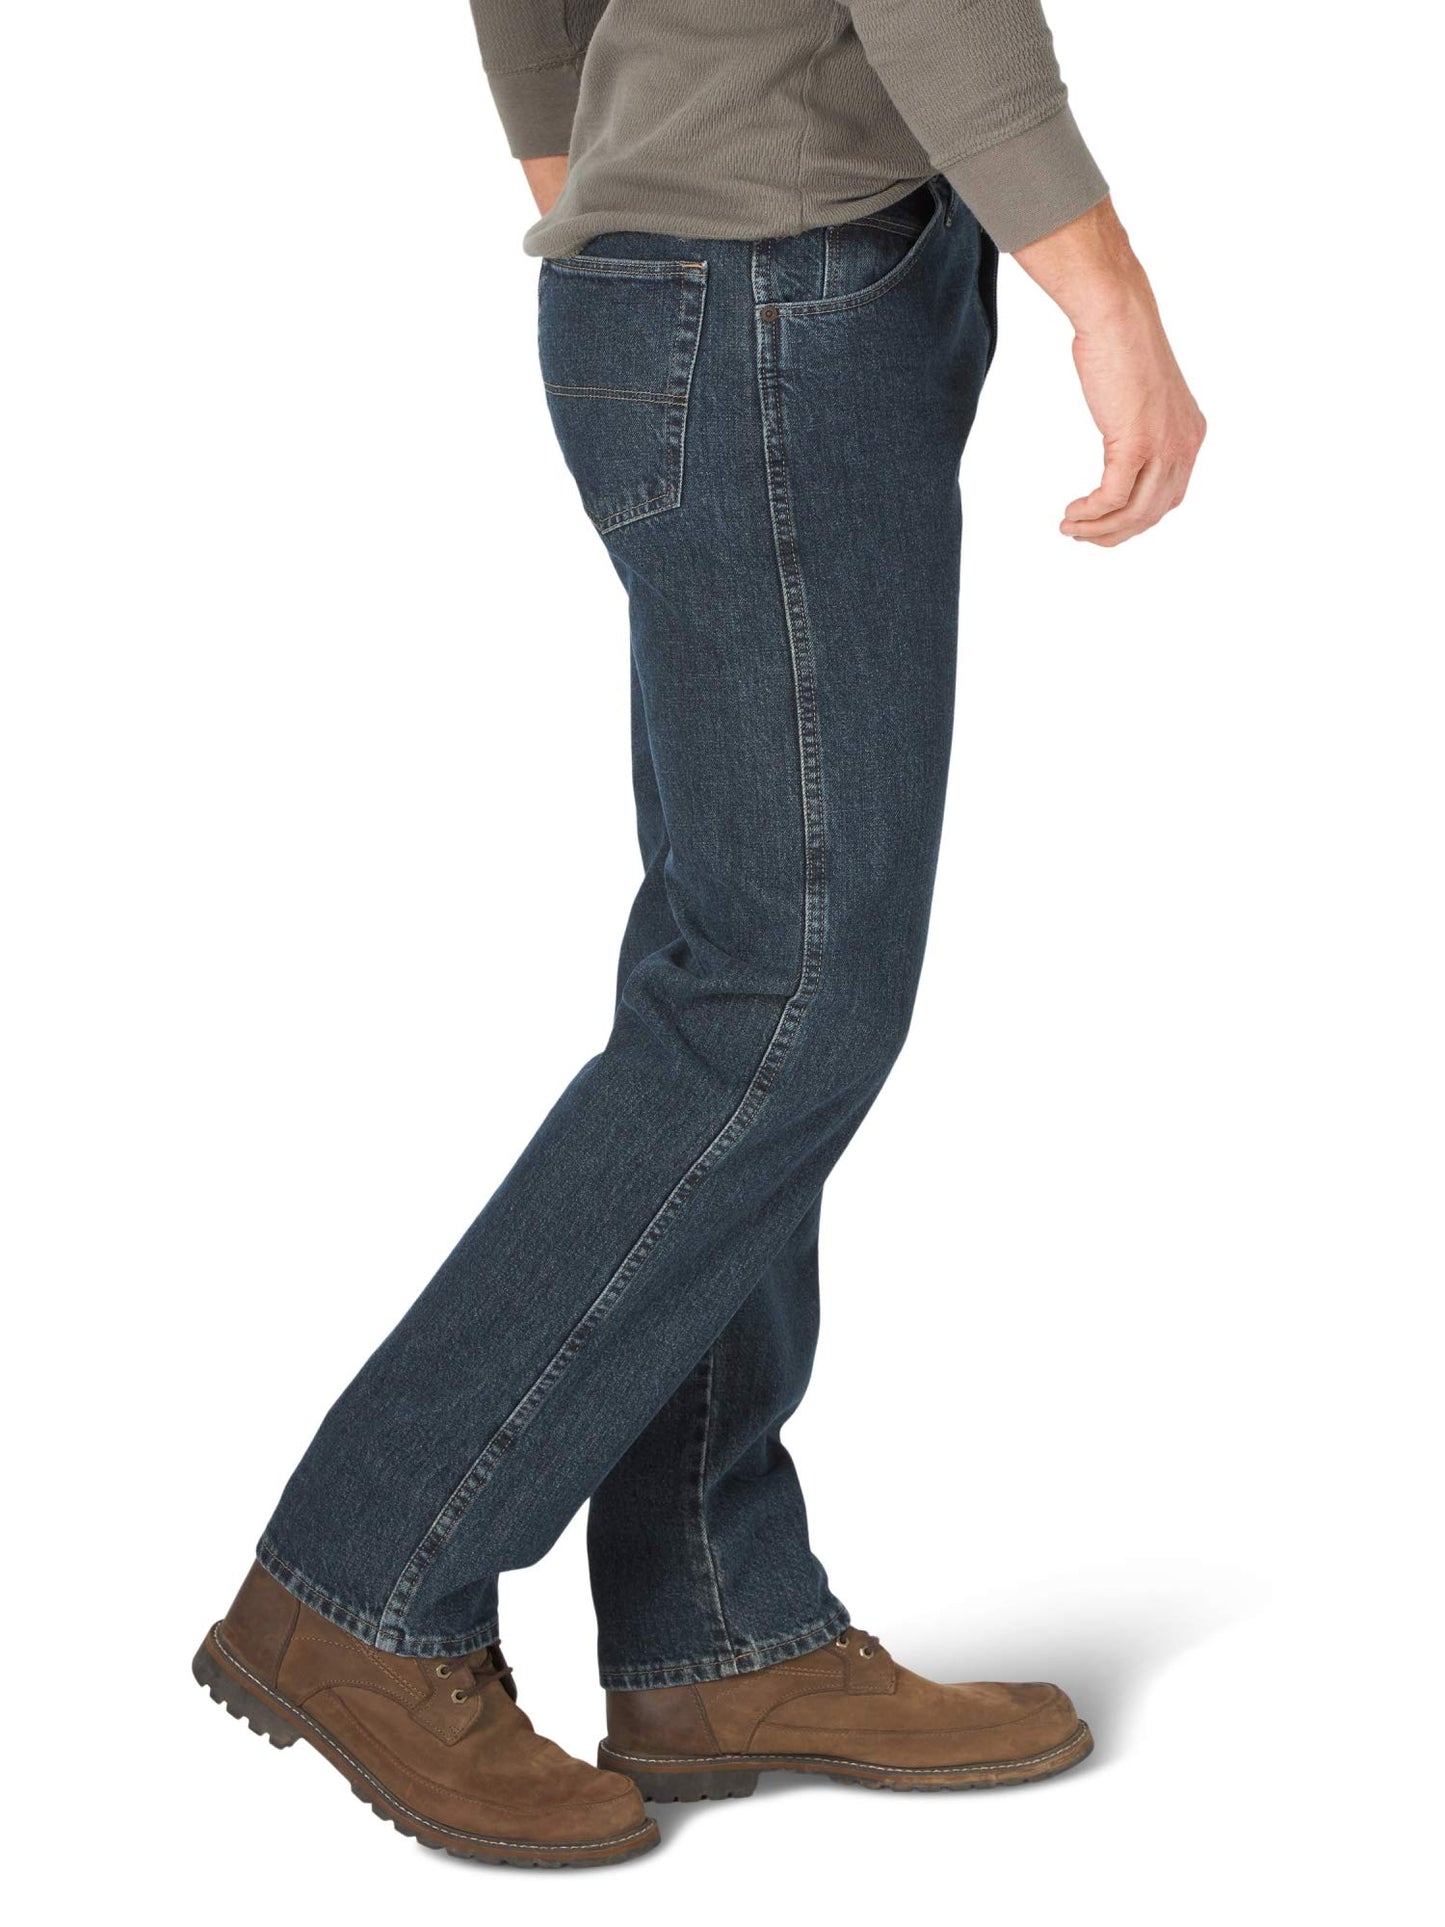 Wrangler Authentics Men's Classic 5-Pocket Regular Fit Cotton Jean, Storm, 32W x 32L